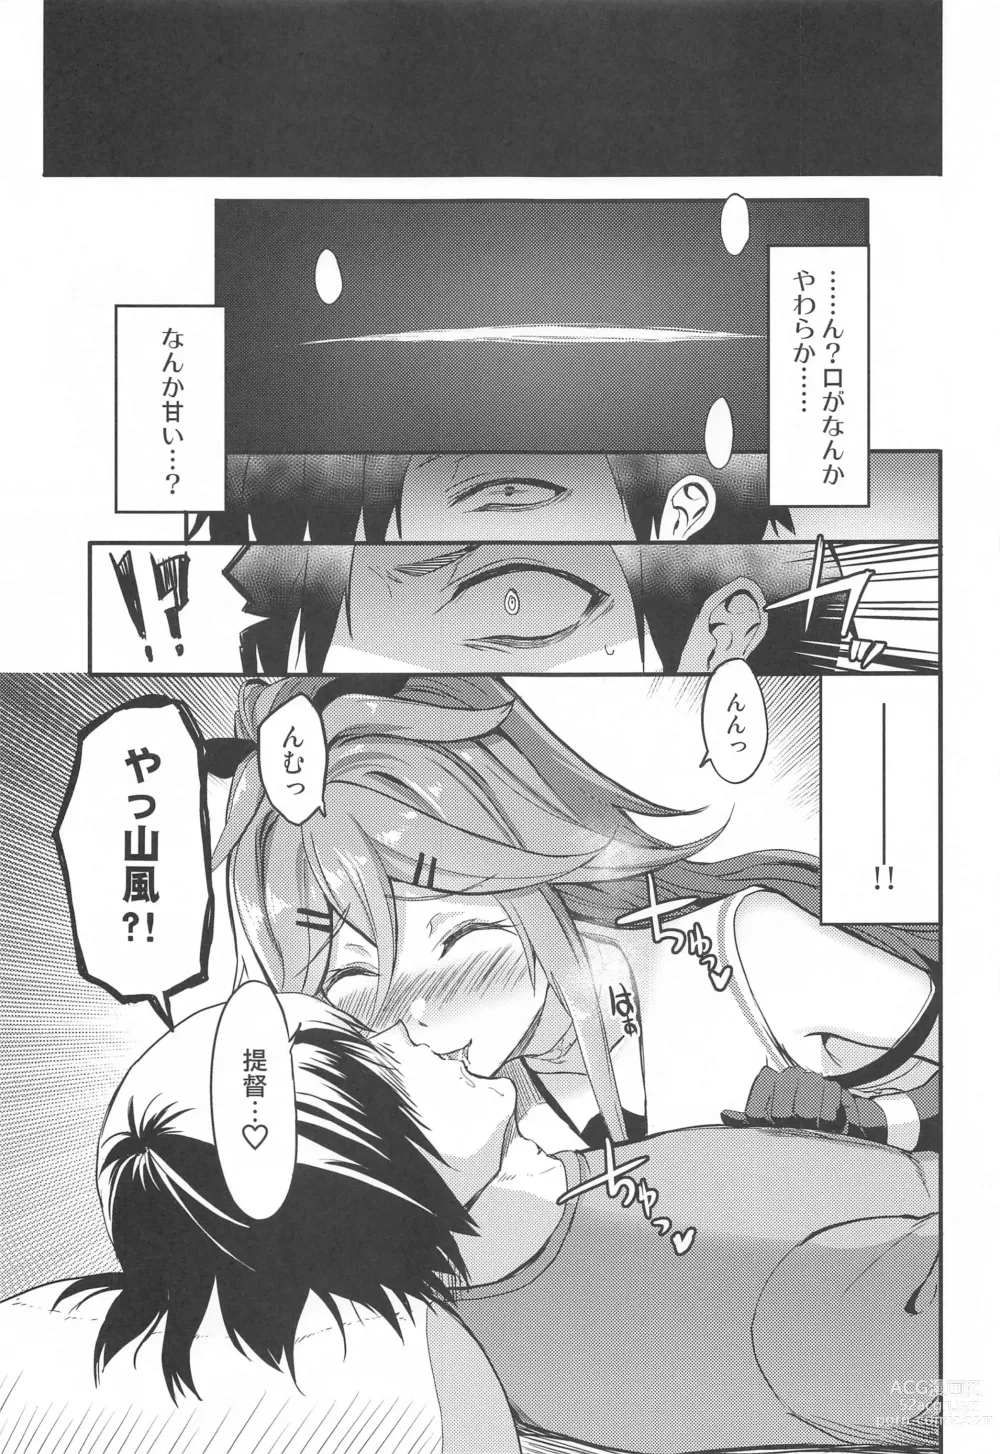 Page 6 of doujinshi Yamakaze to Nakayoku Naru made